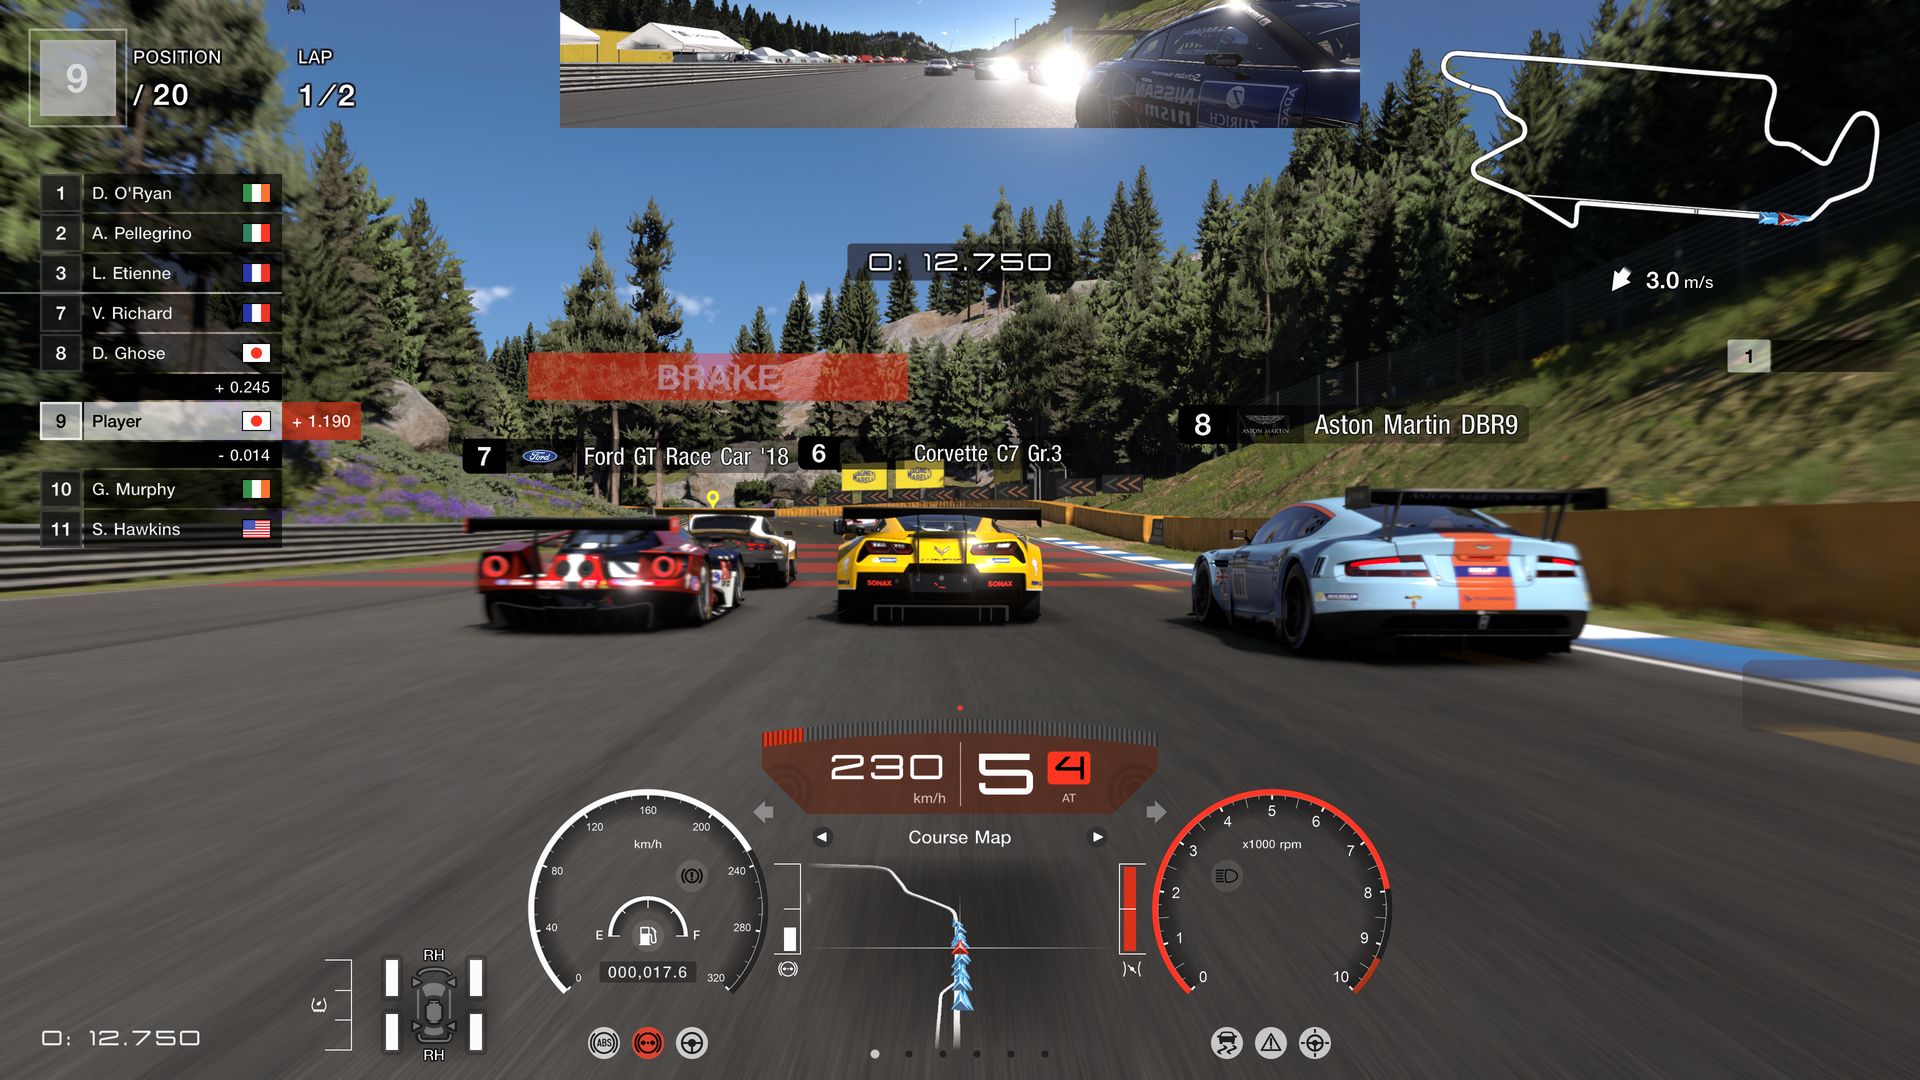 Gran Turismo 7 - Exclusive PS5 & PS4 Games